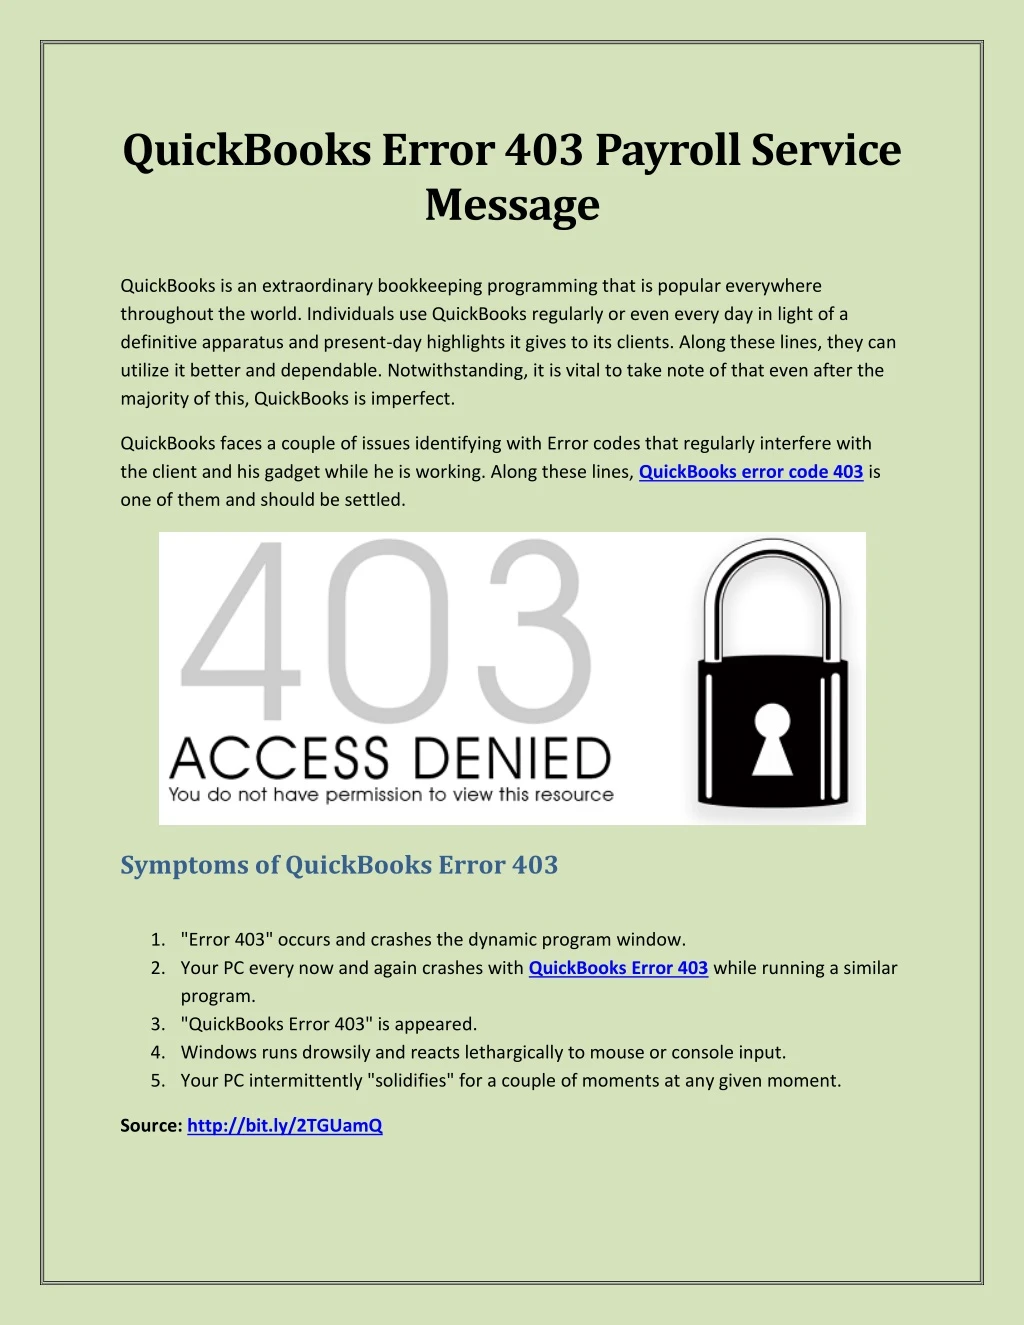 quickbooks error 403 payroll service message